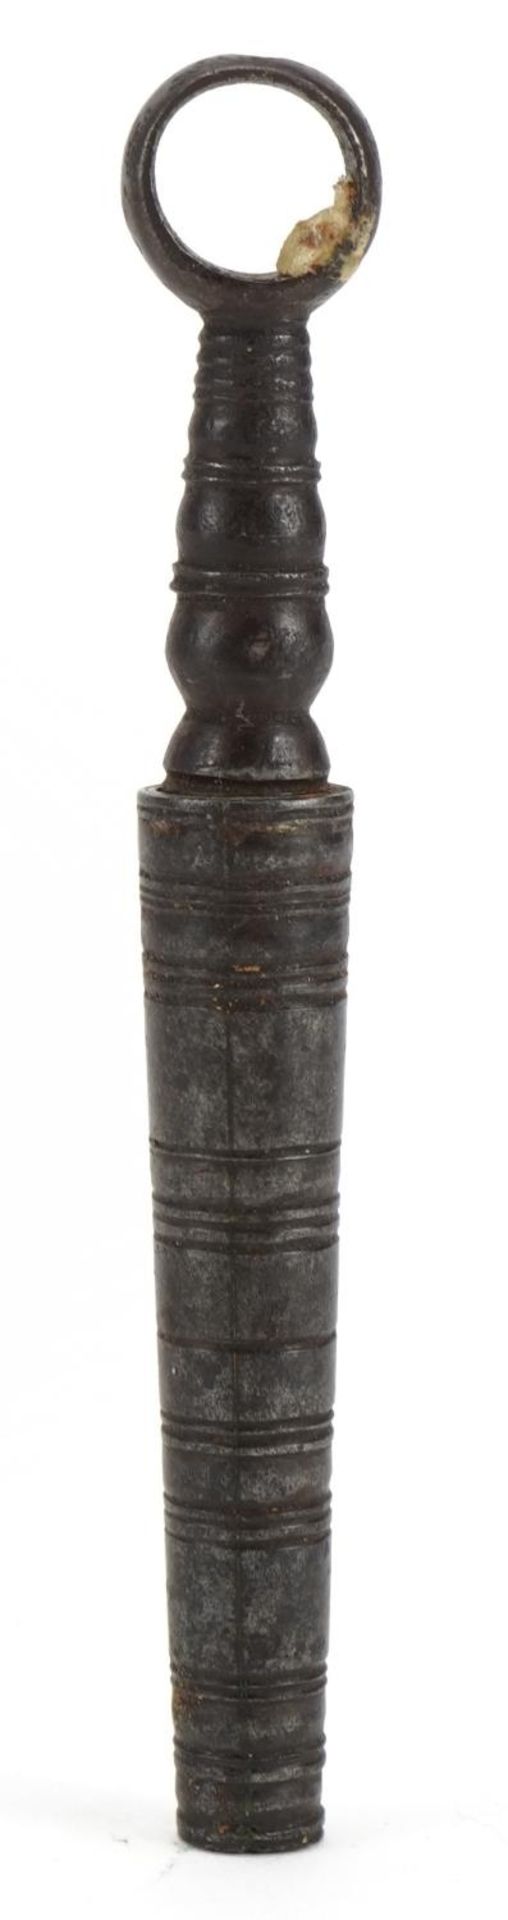 Georgian simple steel corkscrew, 10cm in length - Image 3 of 3